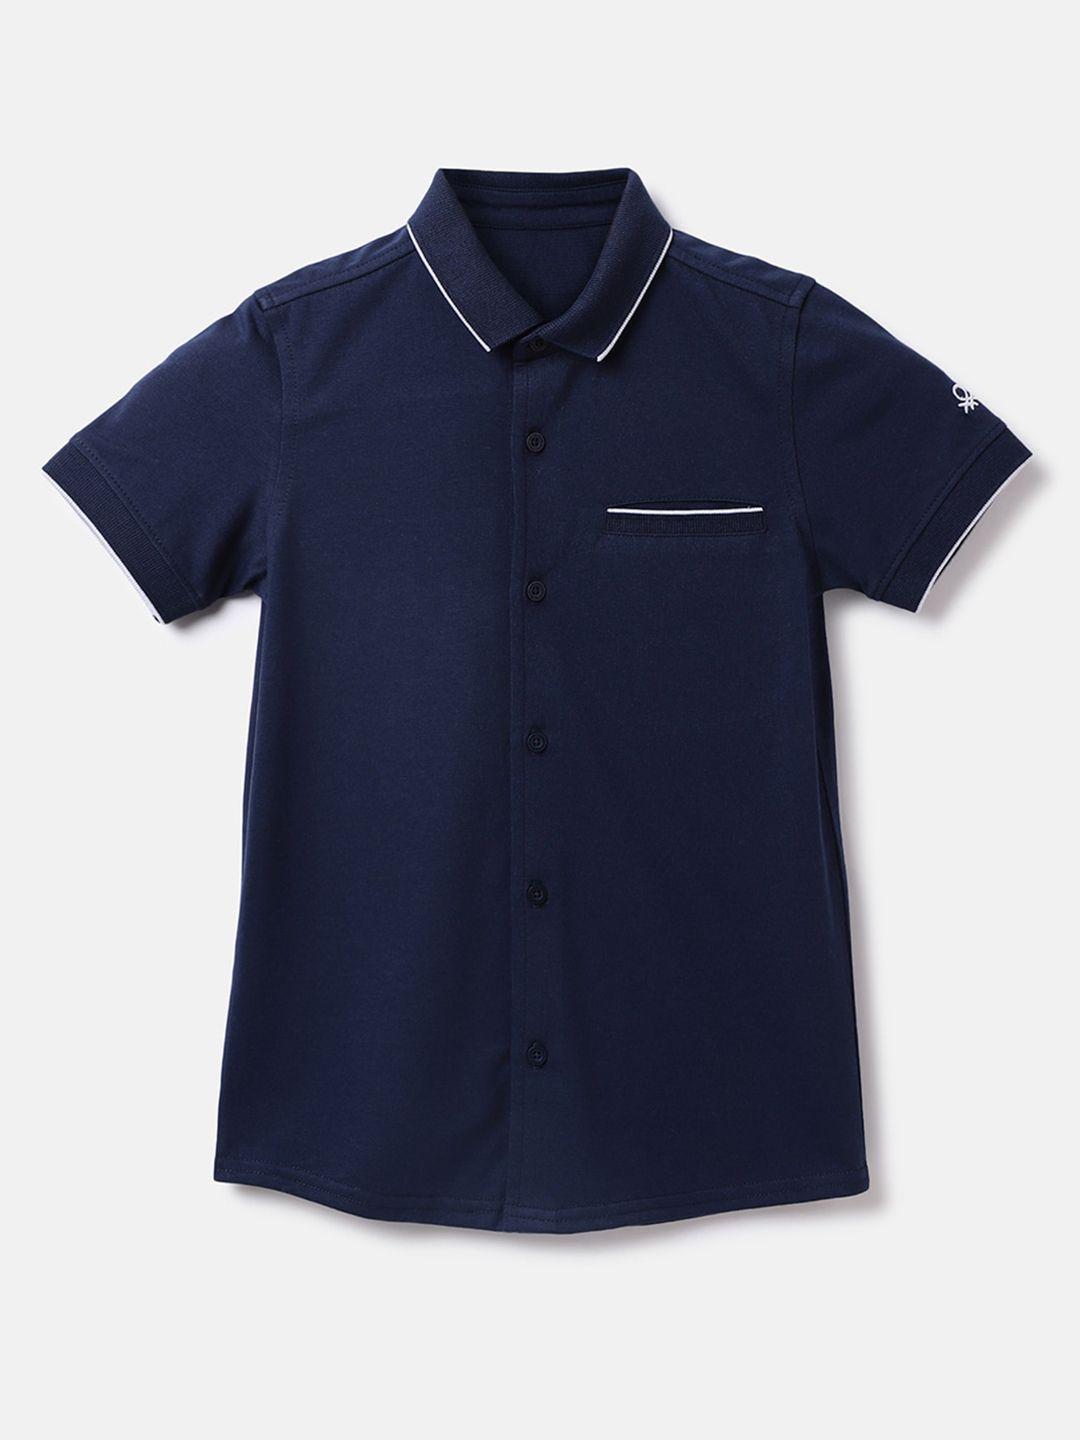 united-colors-of-benetton-boys-spread-collar-cotton-shirt